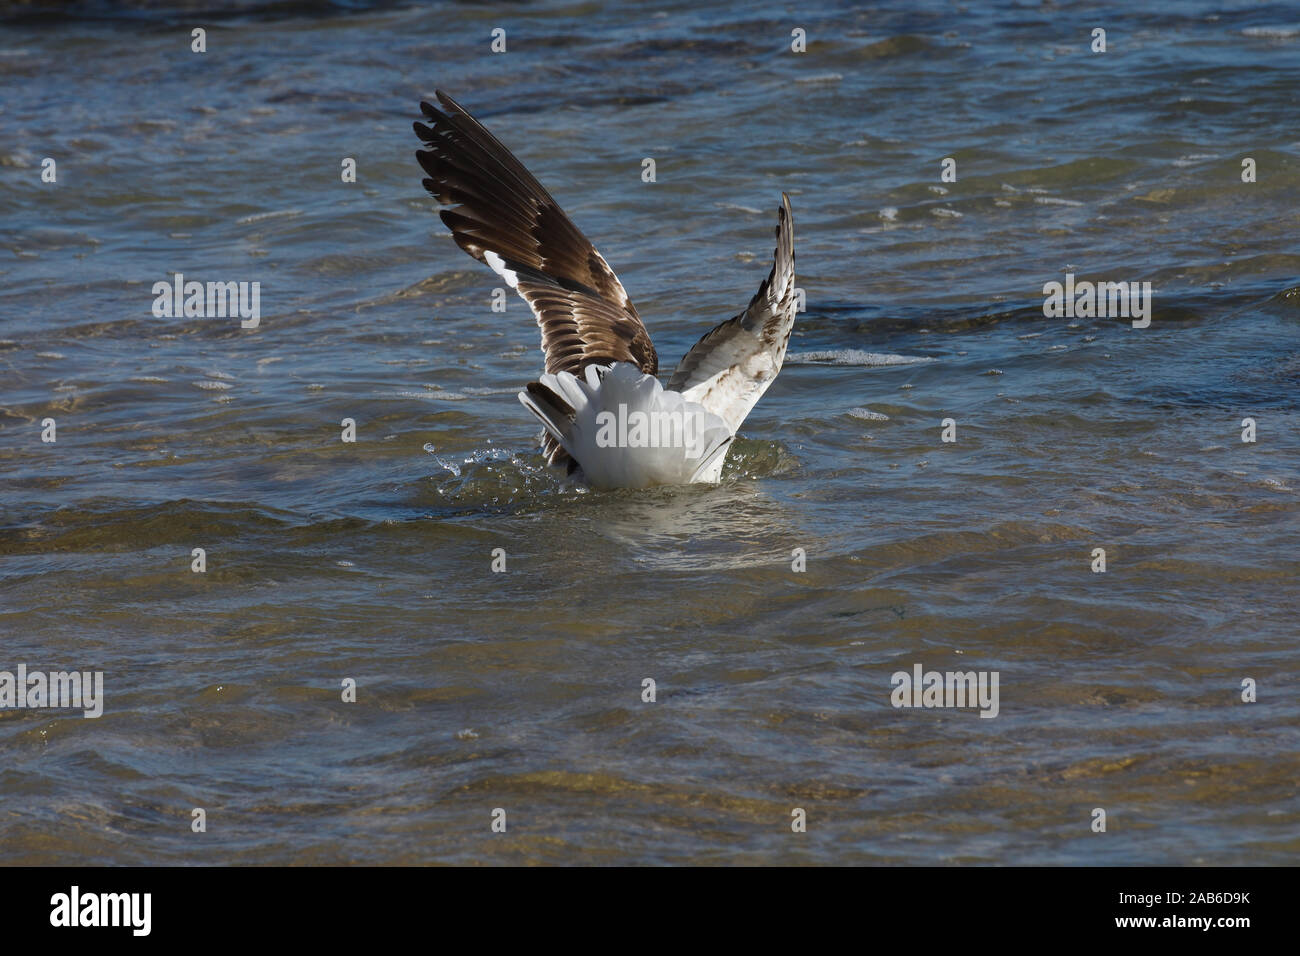 Kelp Gull Splash Down In Seawater (Larus dominicanus) Stock Photo